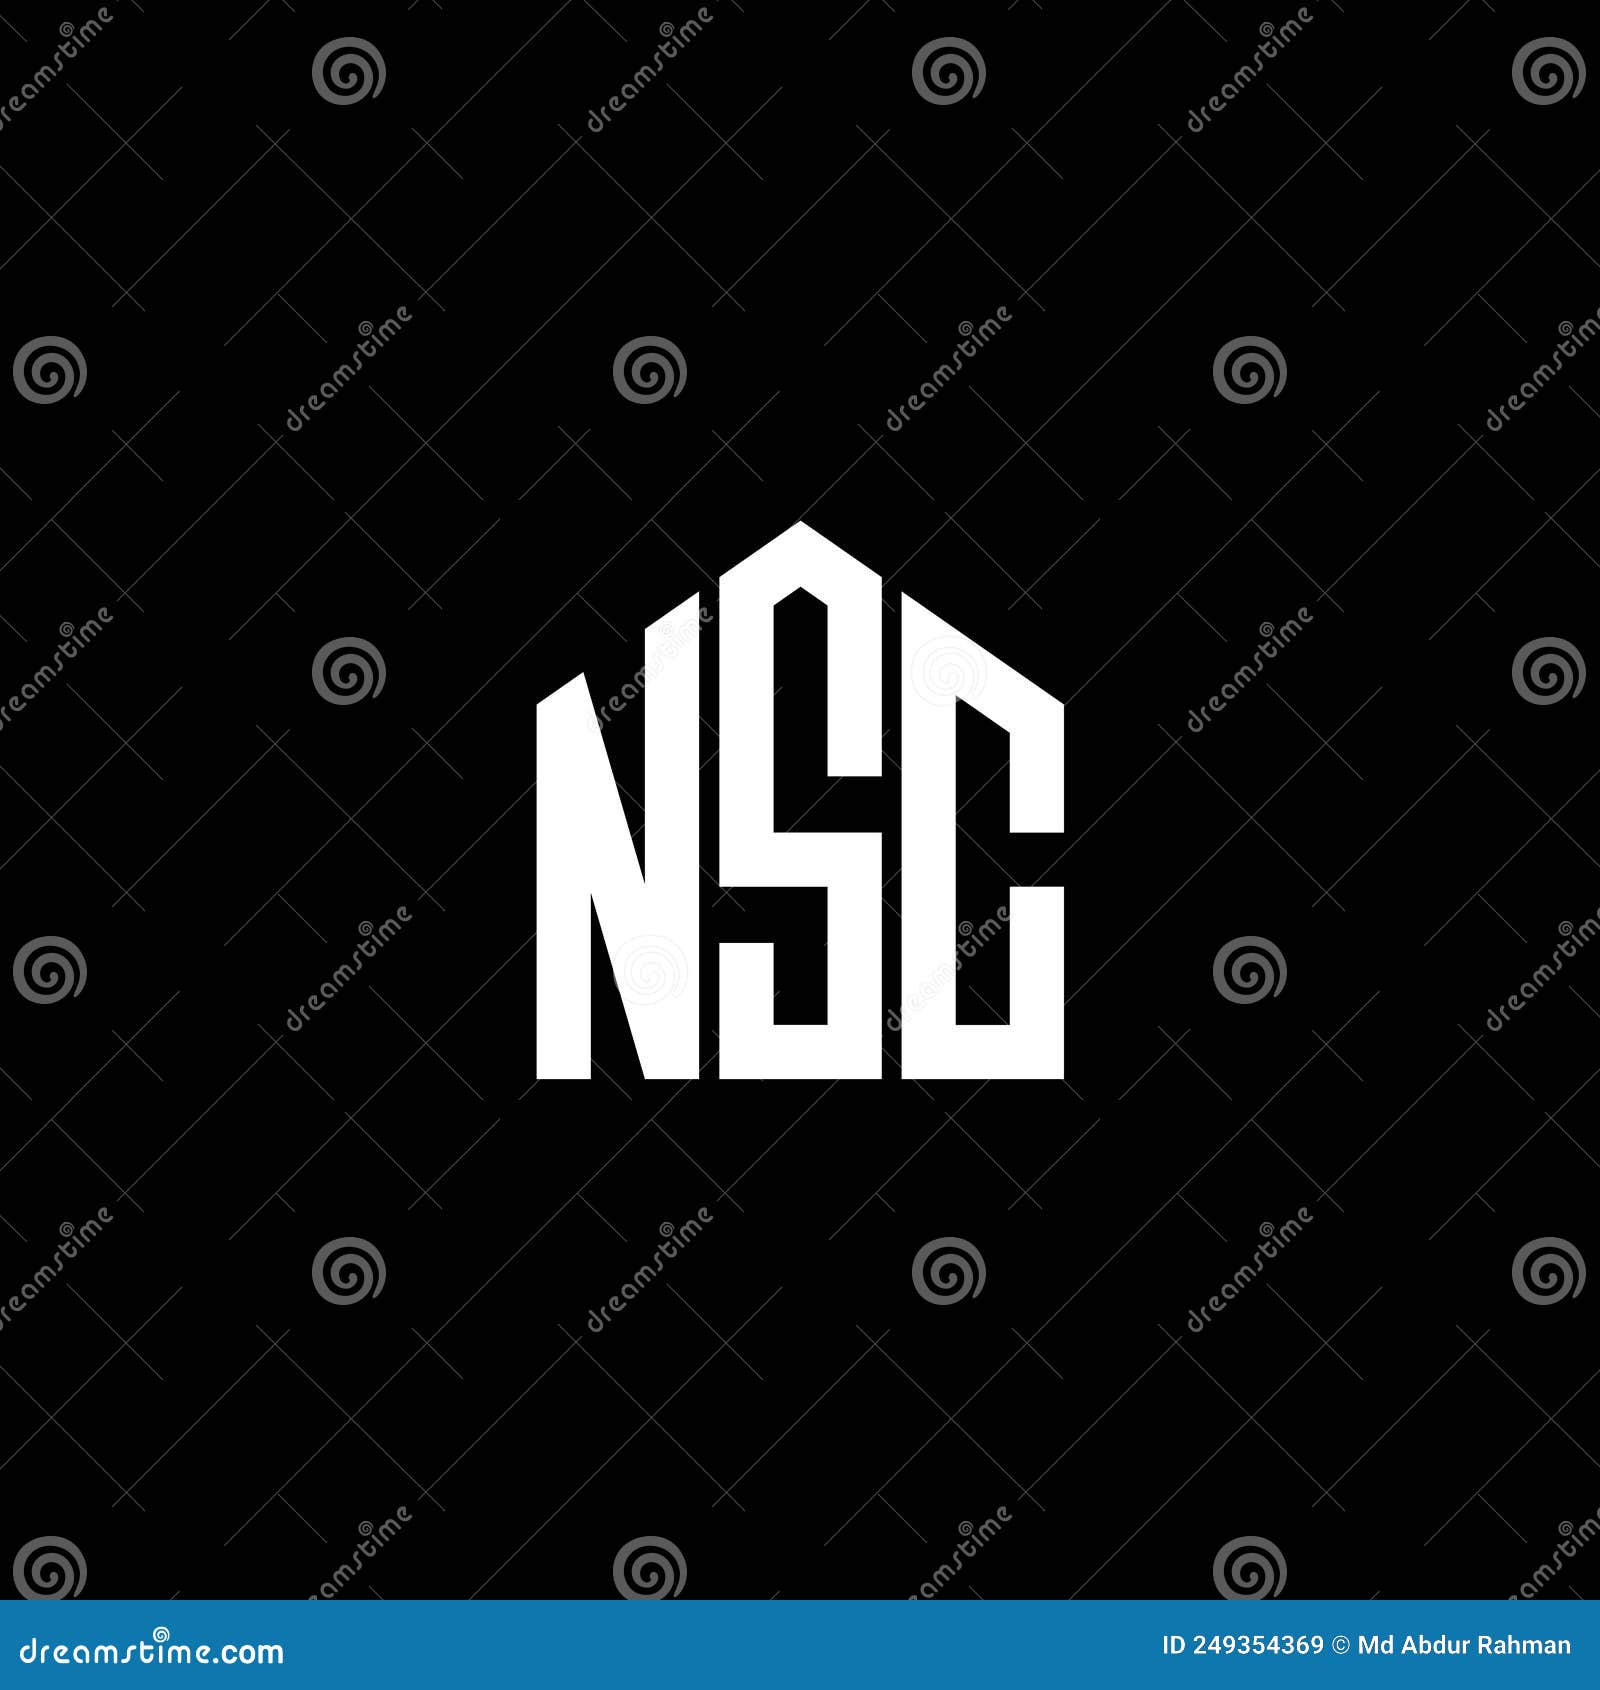 campus logo: NSC logo